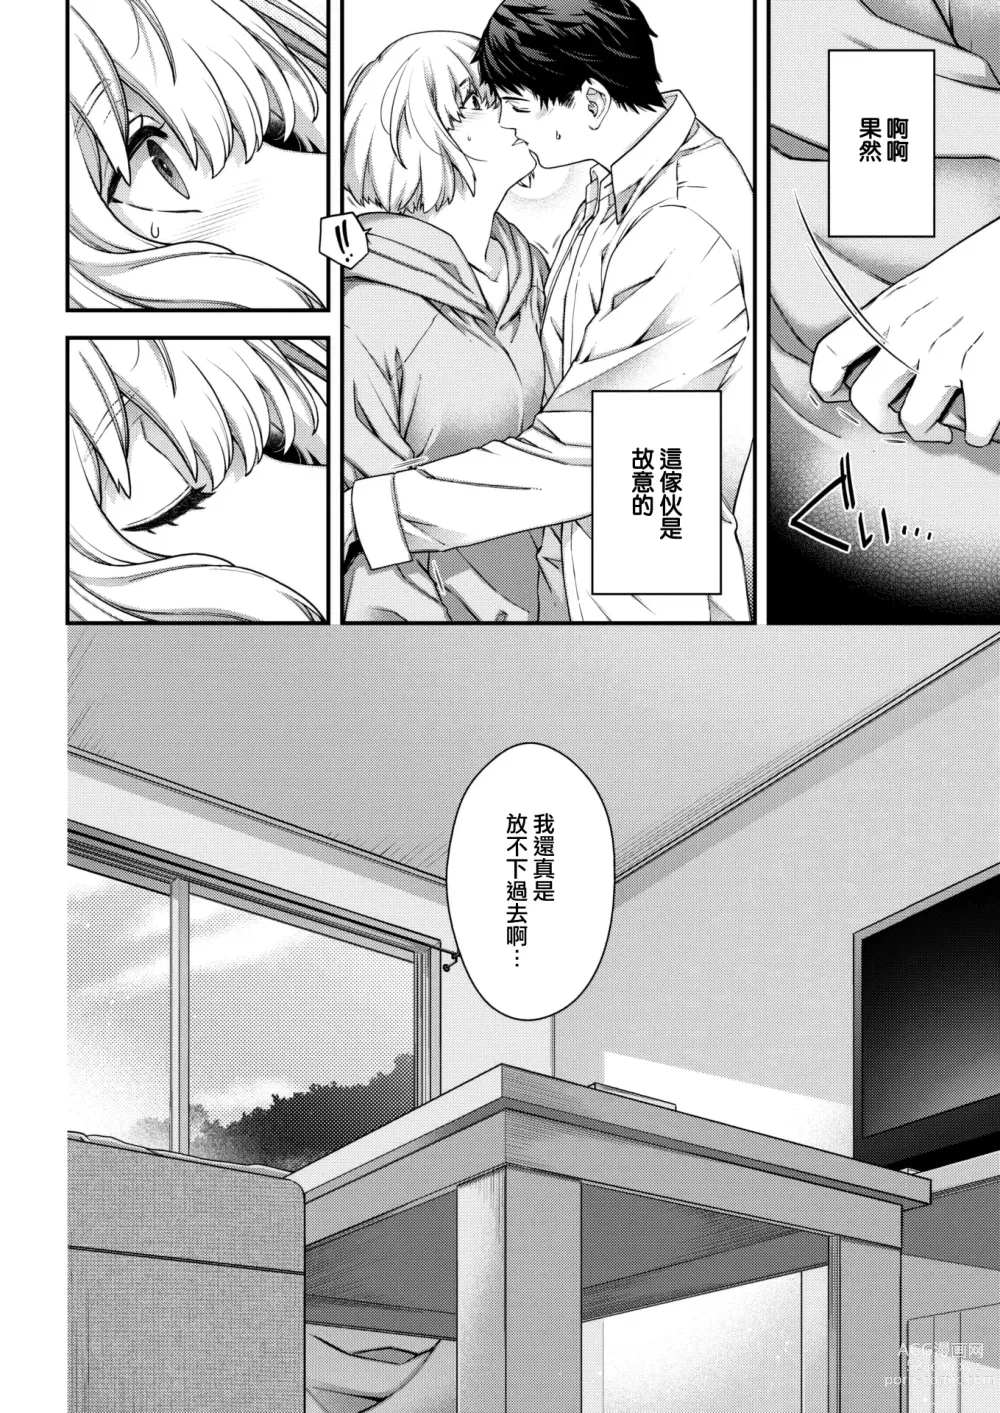 Page 9 of manga Sugao no Kikyou